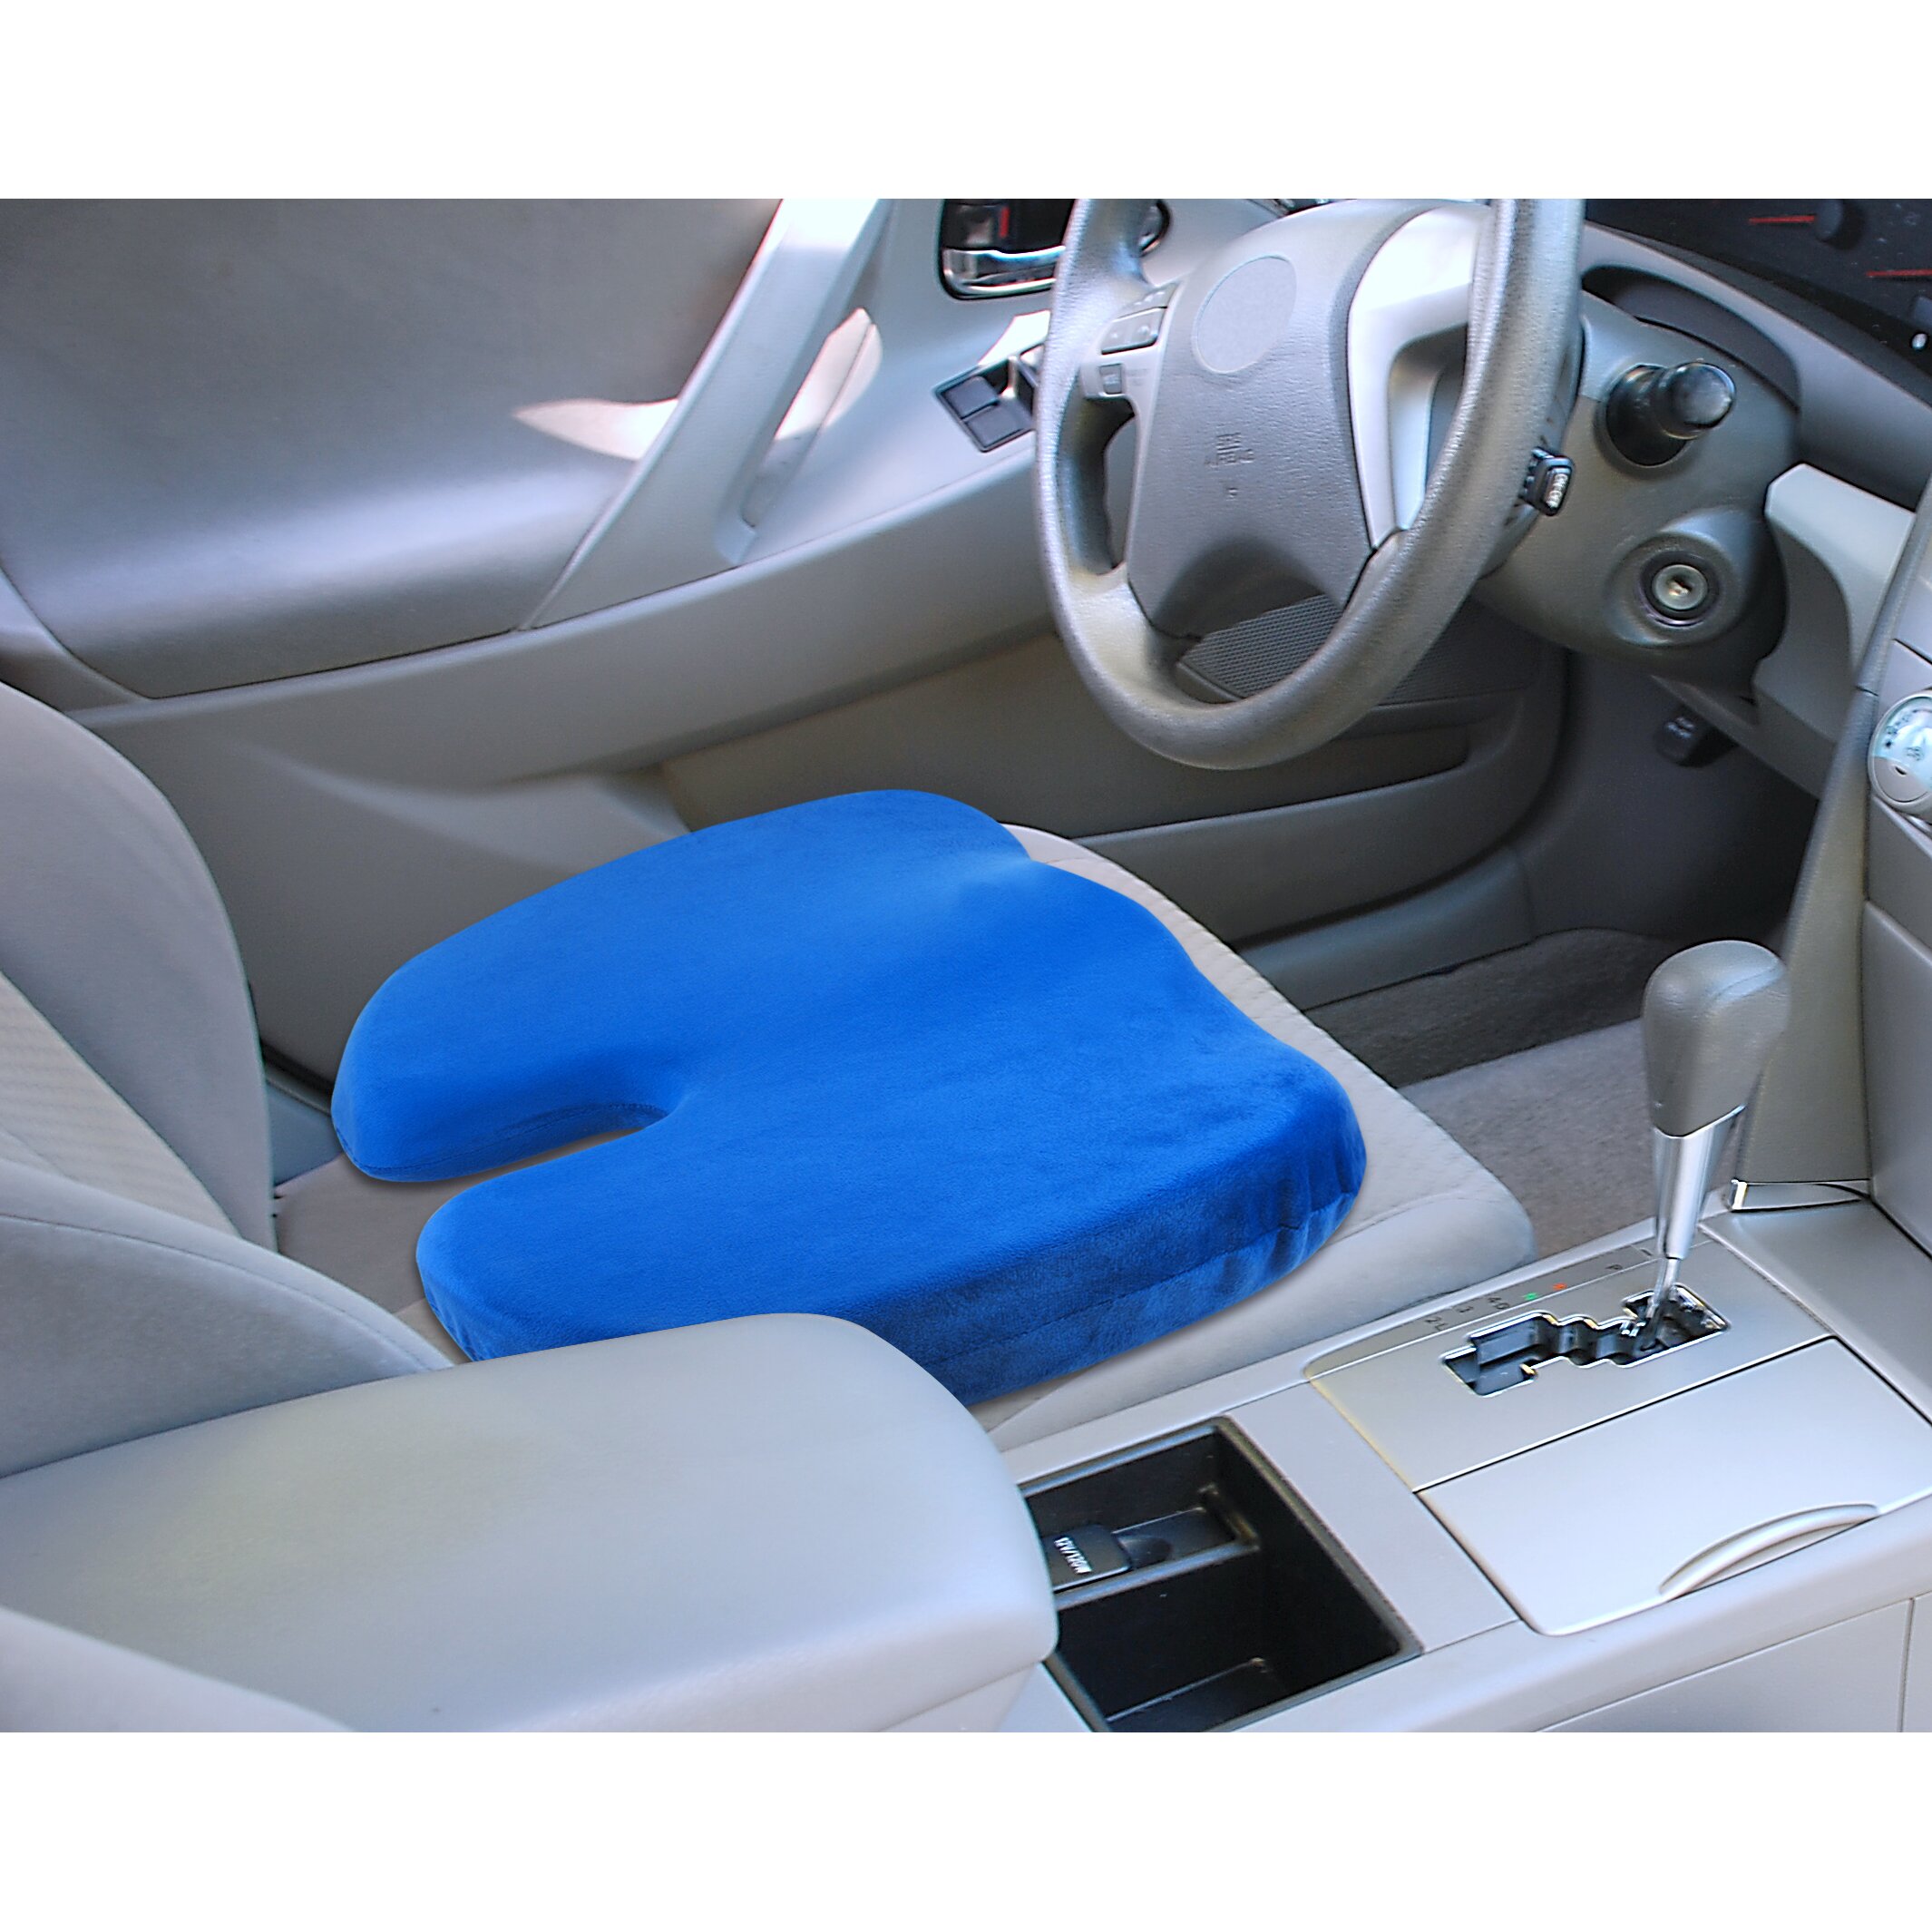 Liteaid Ergonomic Memory Foam Seat Cushion & Reviews | Wayfair